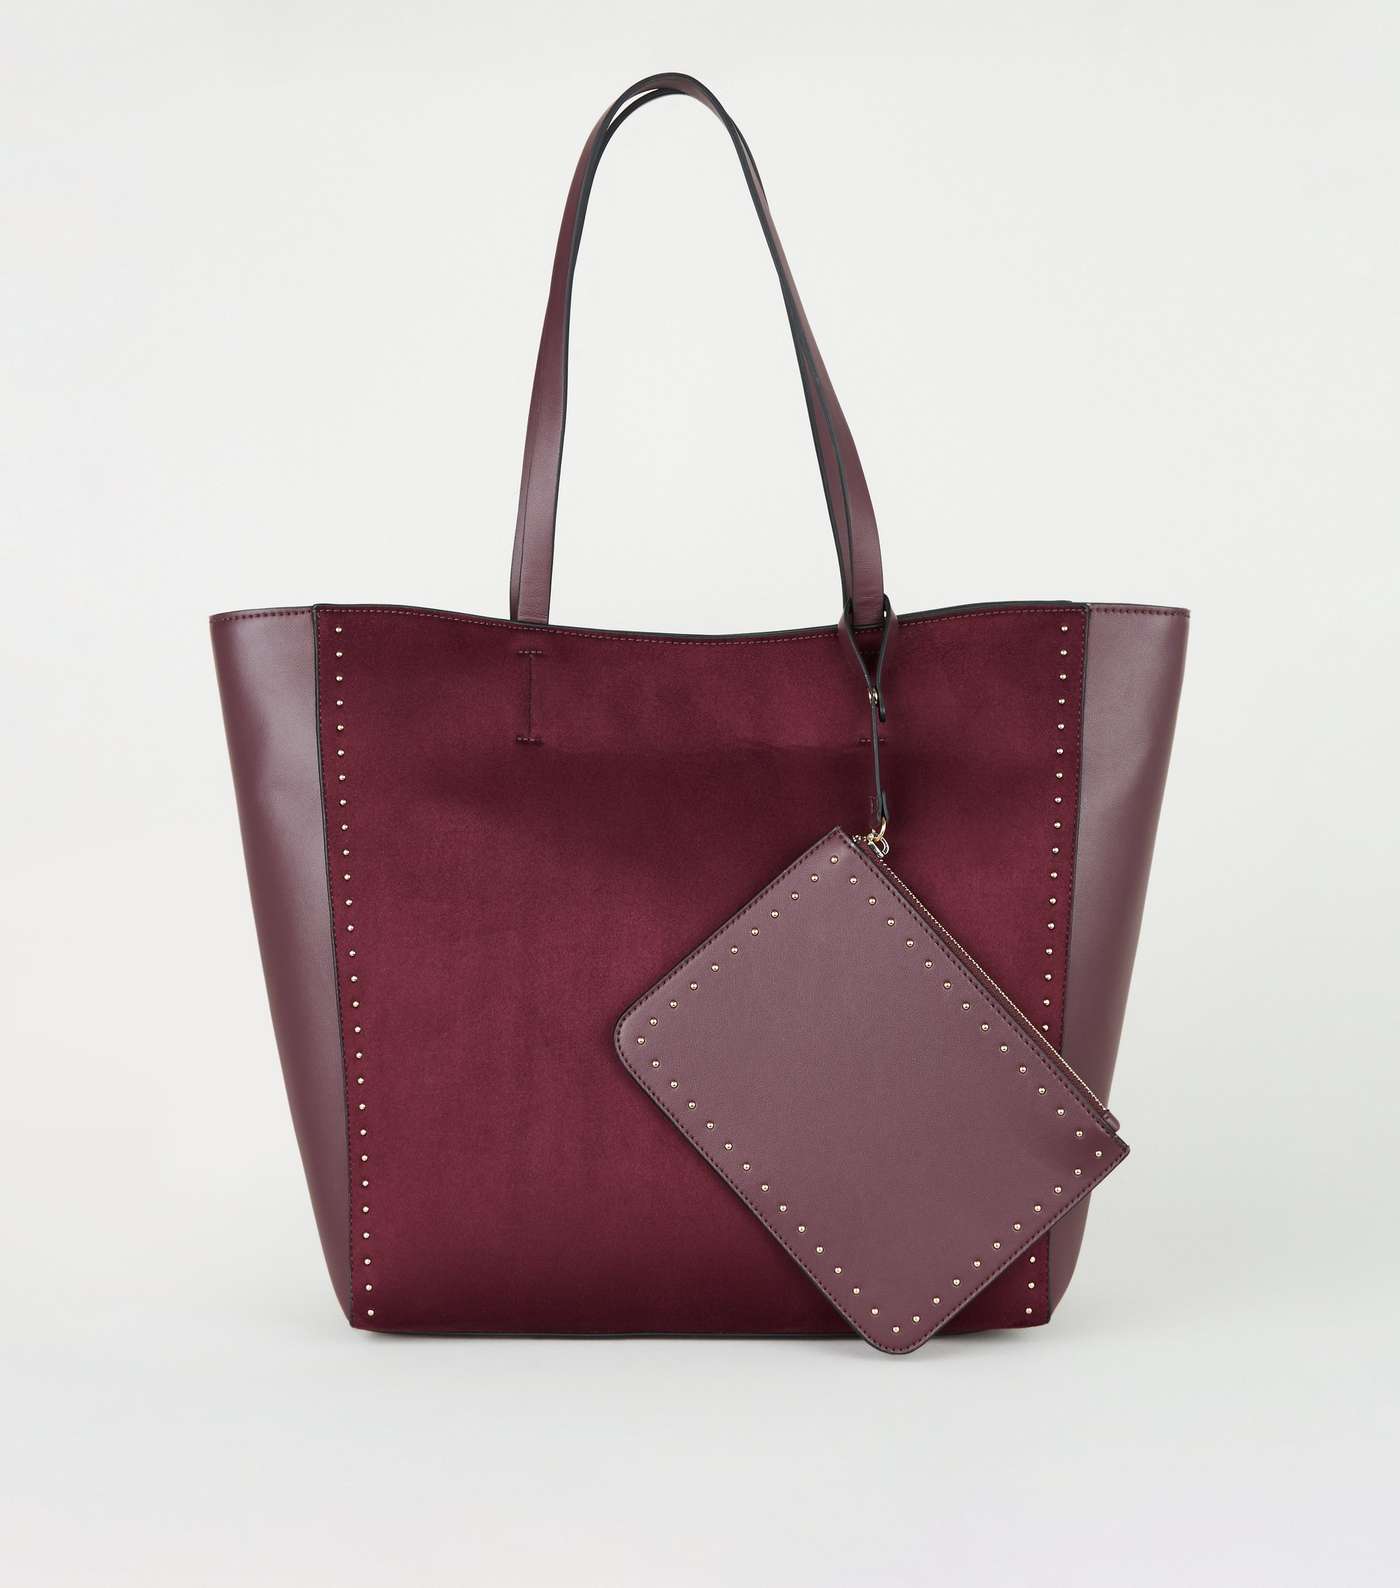 Burgundy Studded Tote Bag with Detachable Purse